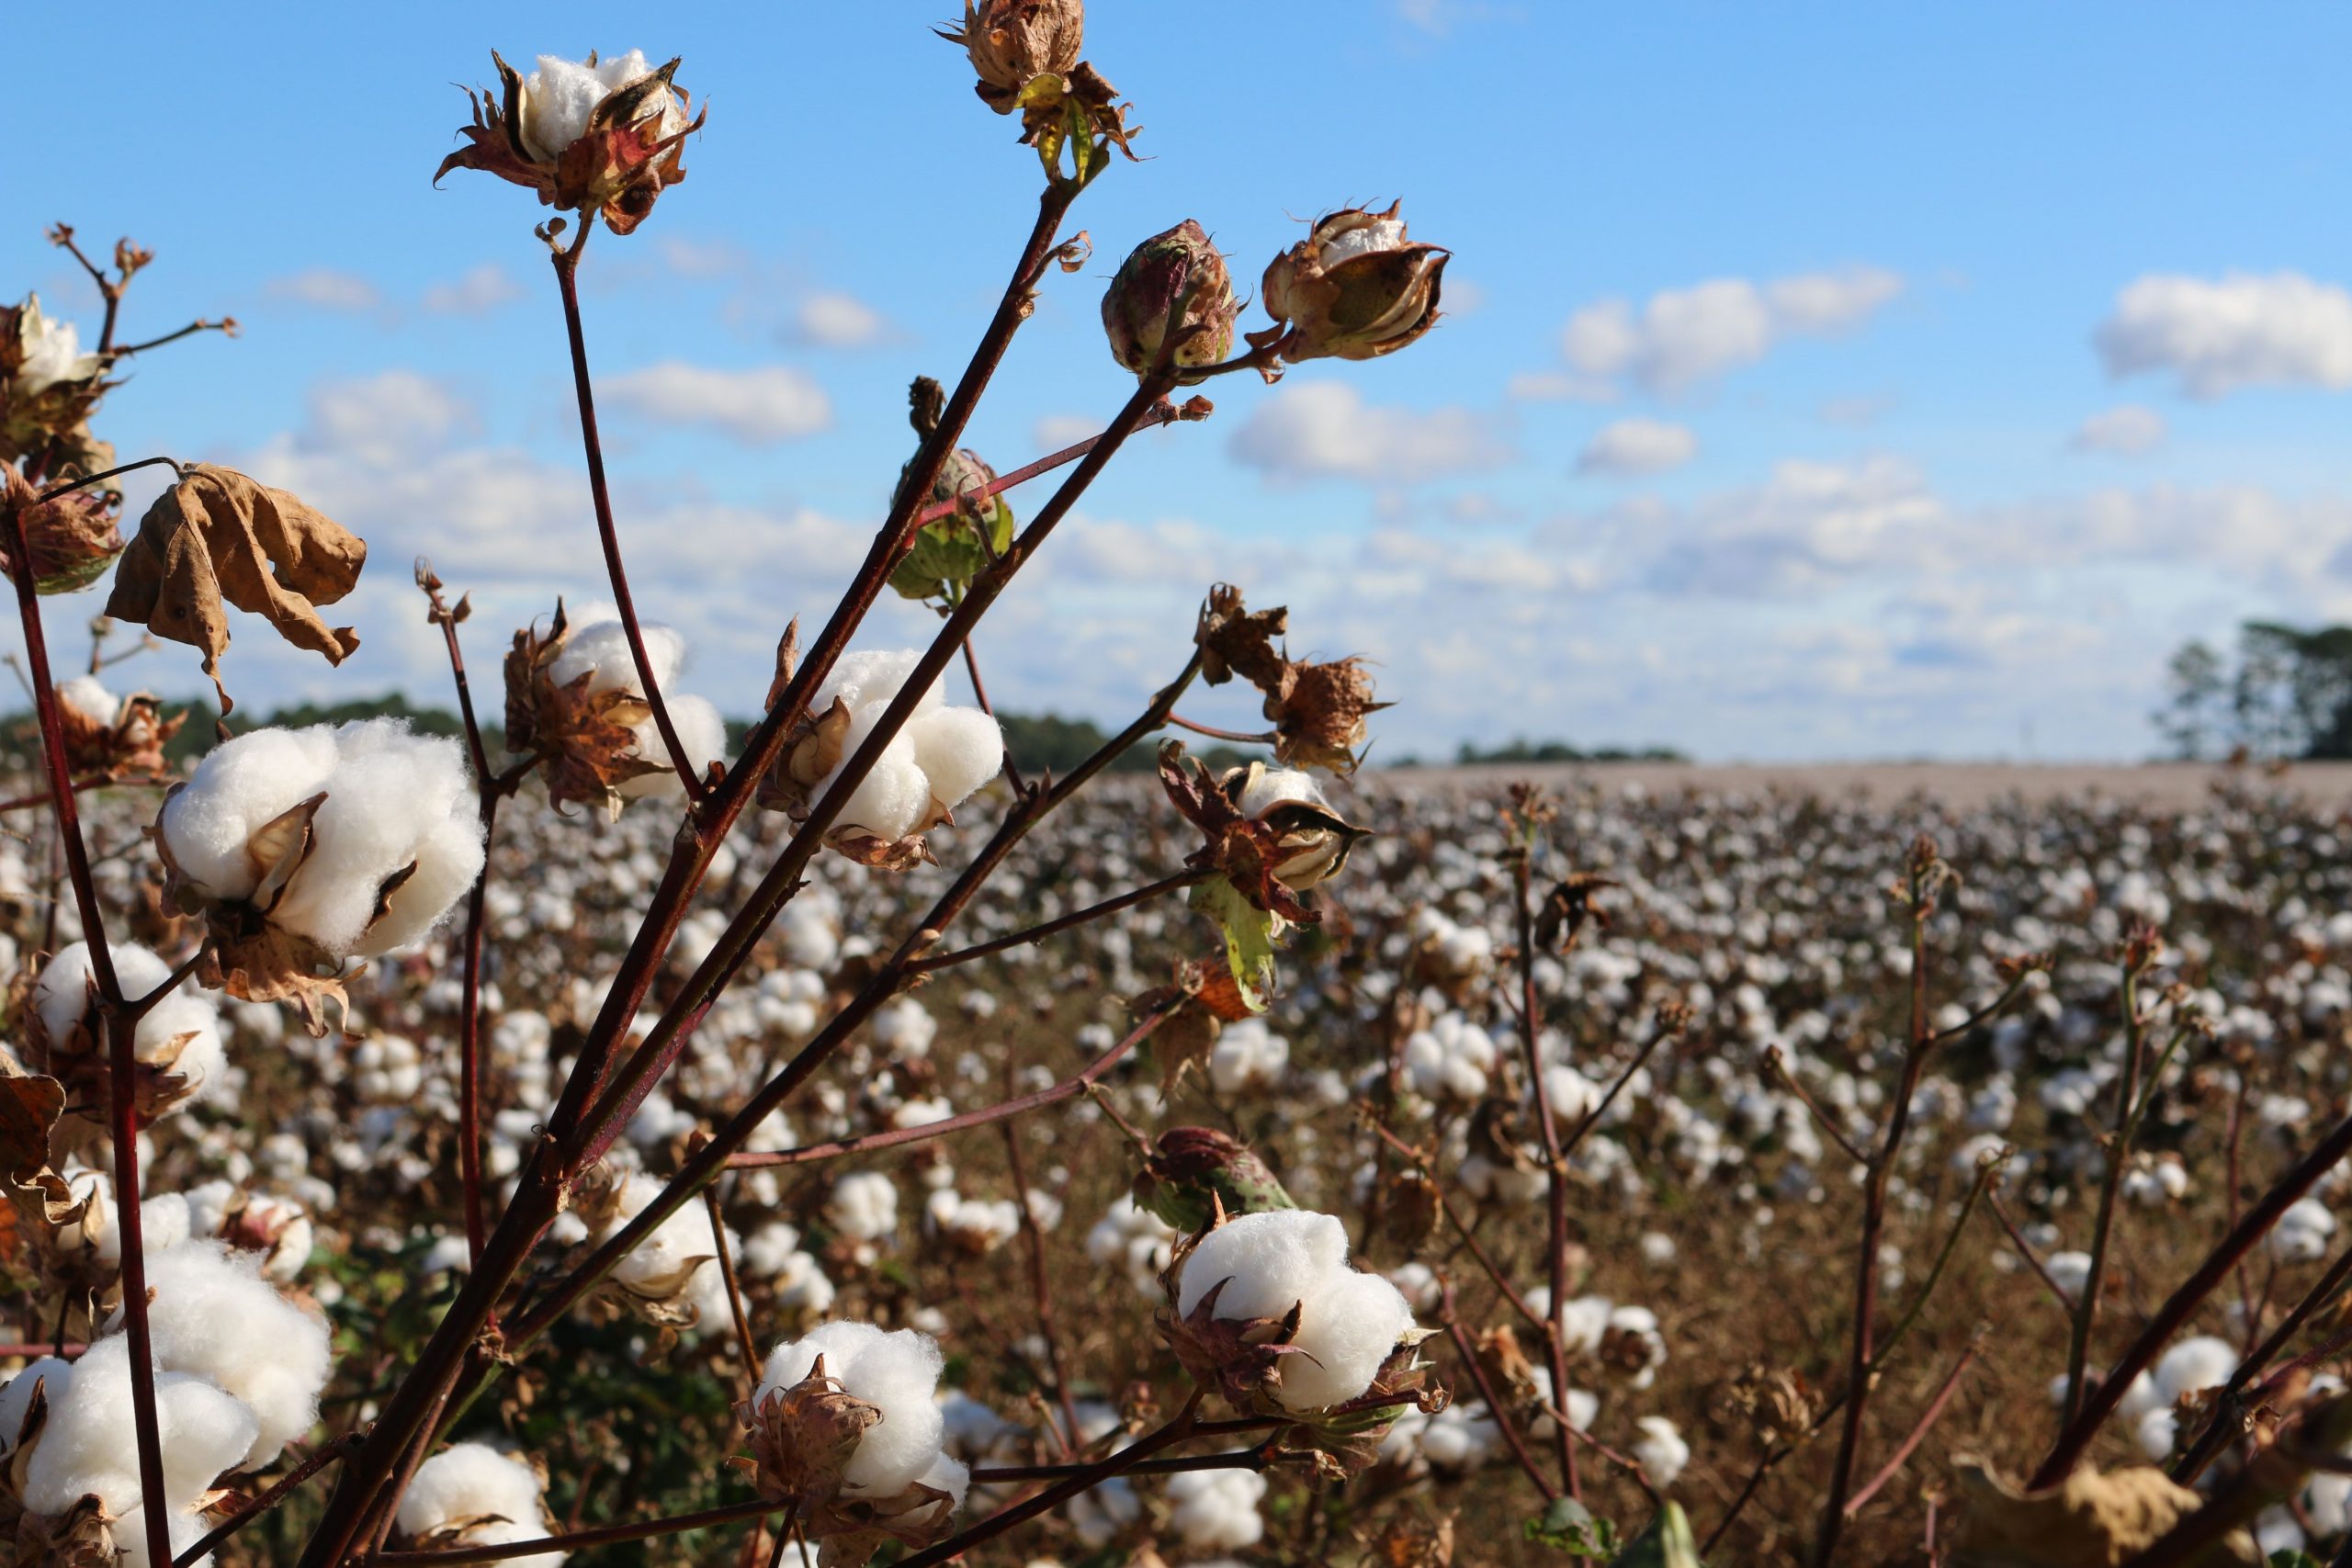 Festive season shopping may turn dearer as cotton prices breach decade-high